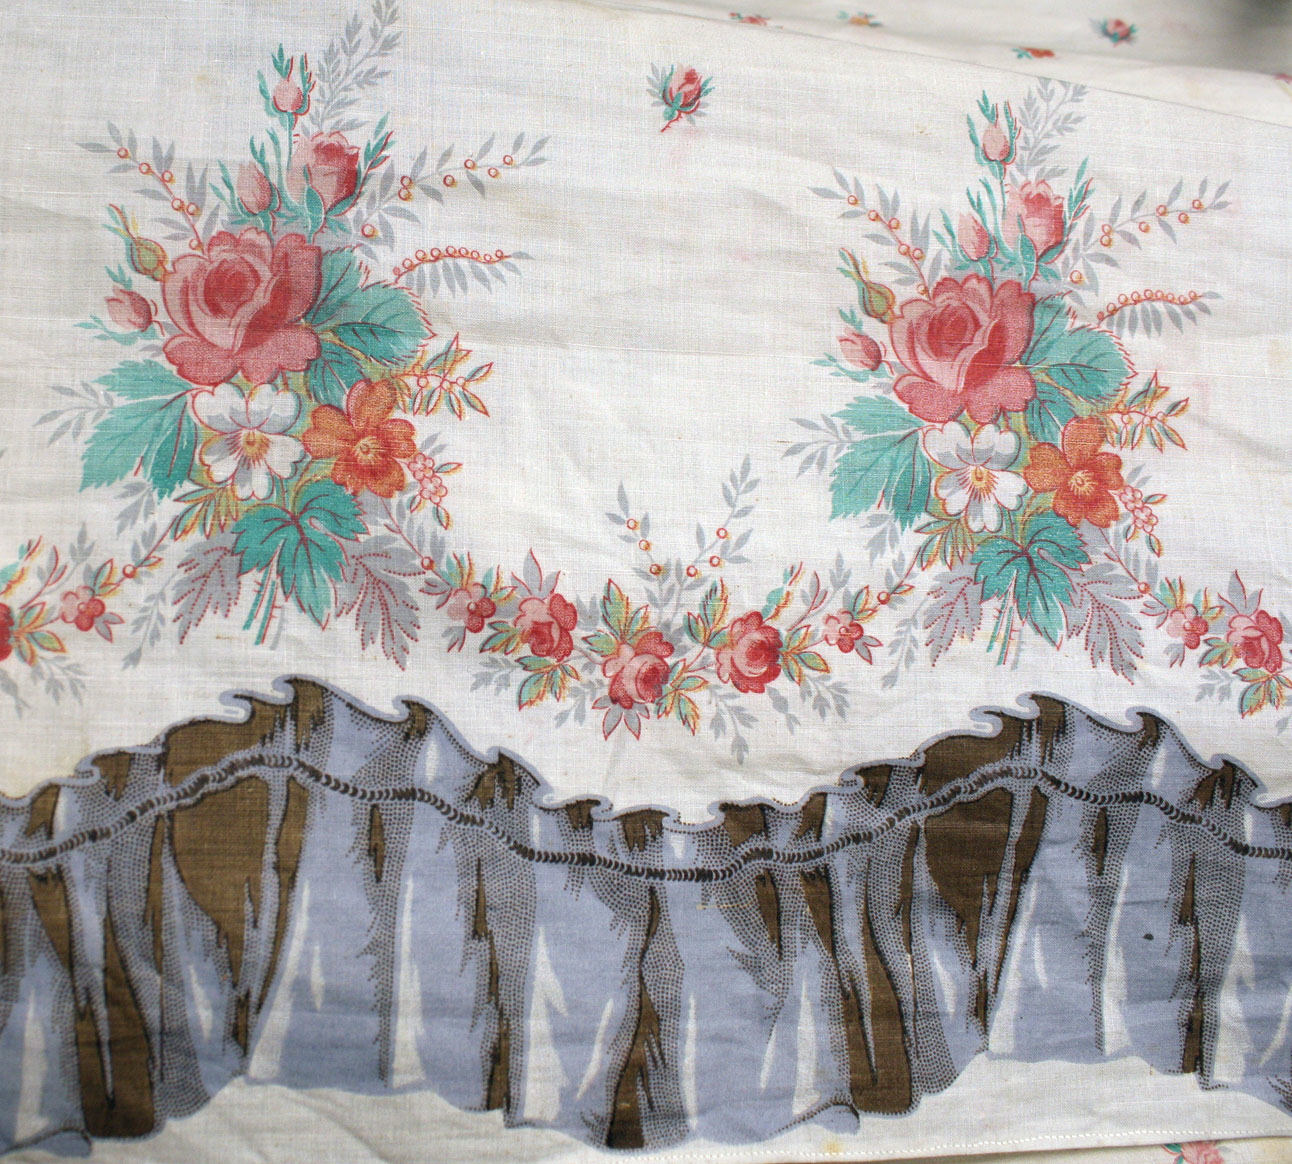 Morning Dress, 1870s, American, cotton, Gift of Mrs. Phillip H. Gray, 1950, Metropolitan Museum of Art, C.I.50.105.18a, b